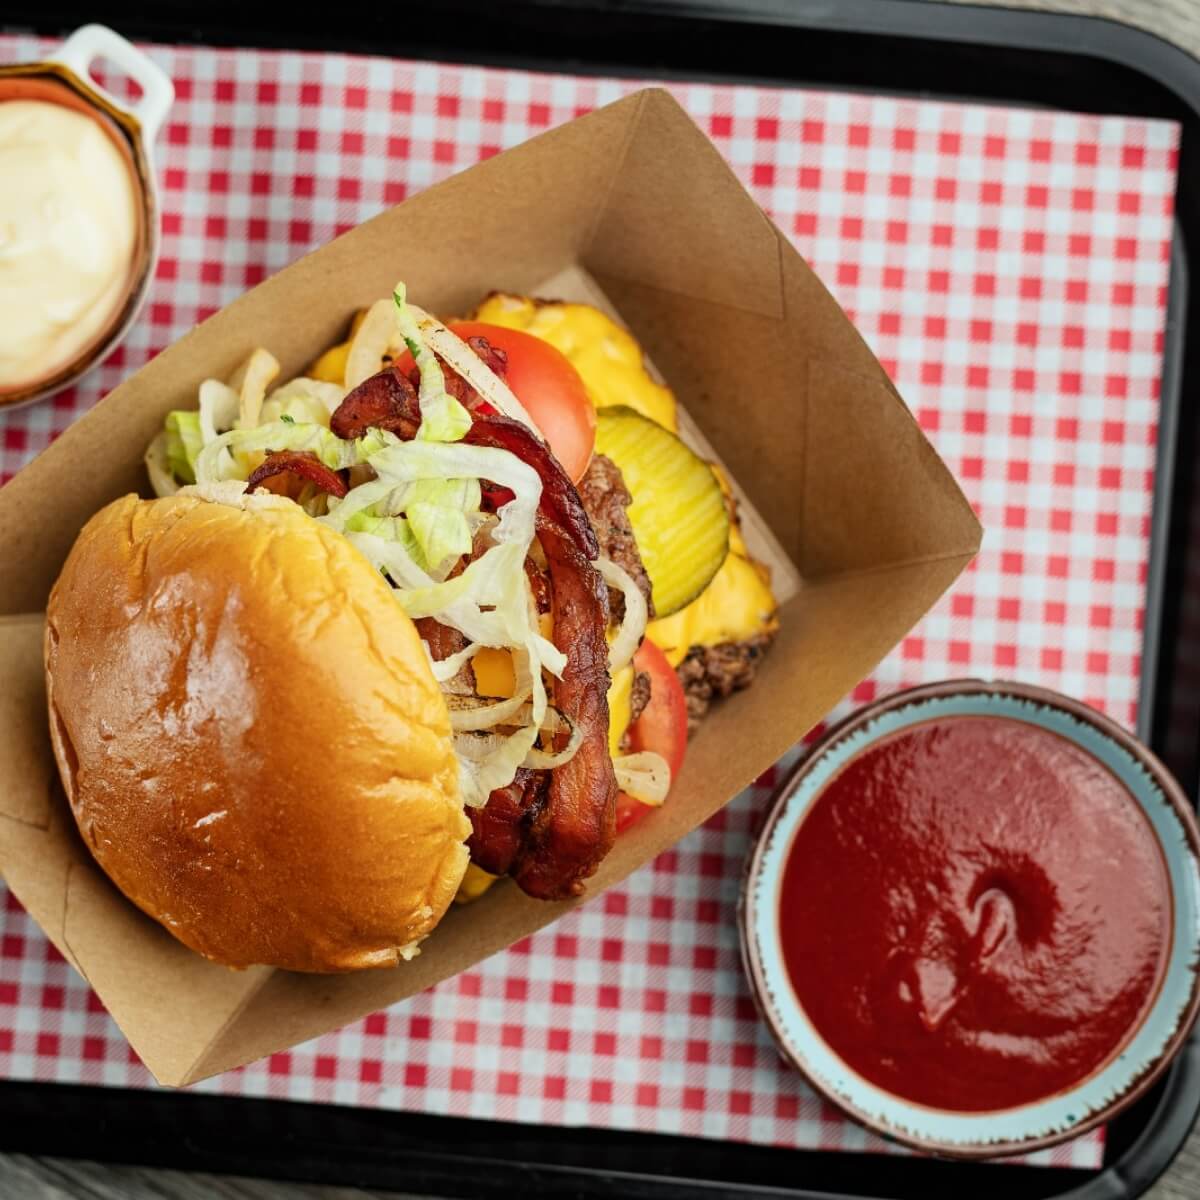 Lunchtruck Gallery: Burger